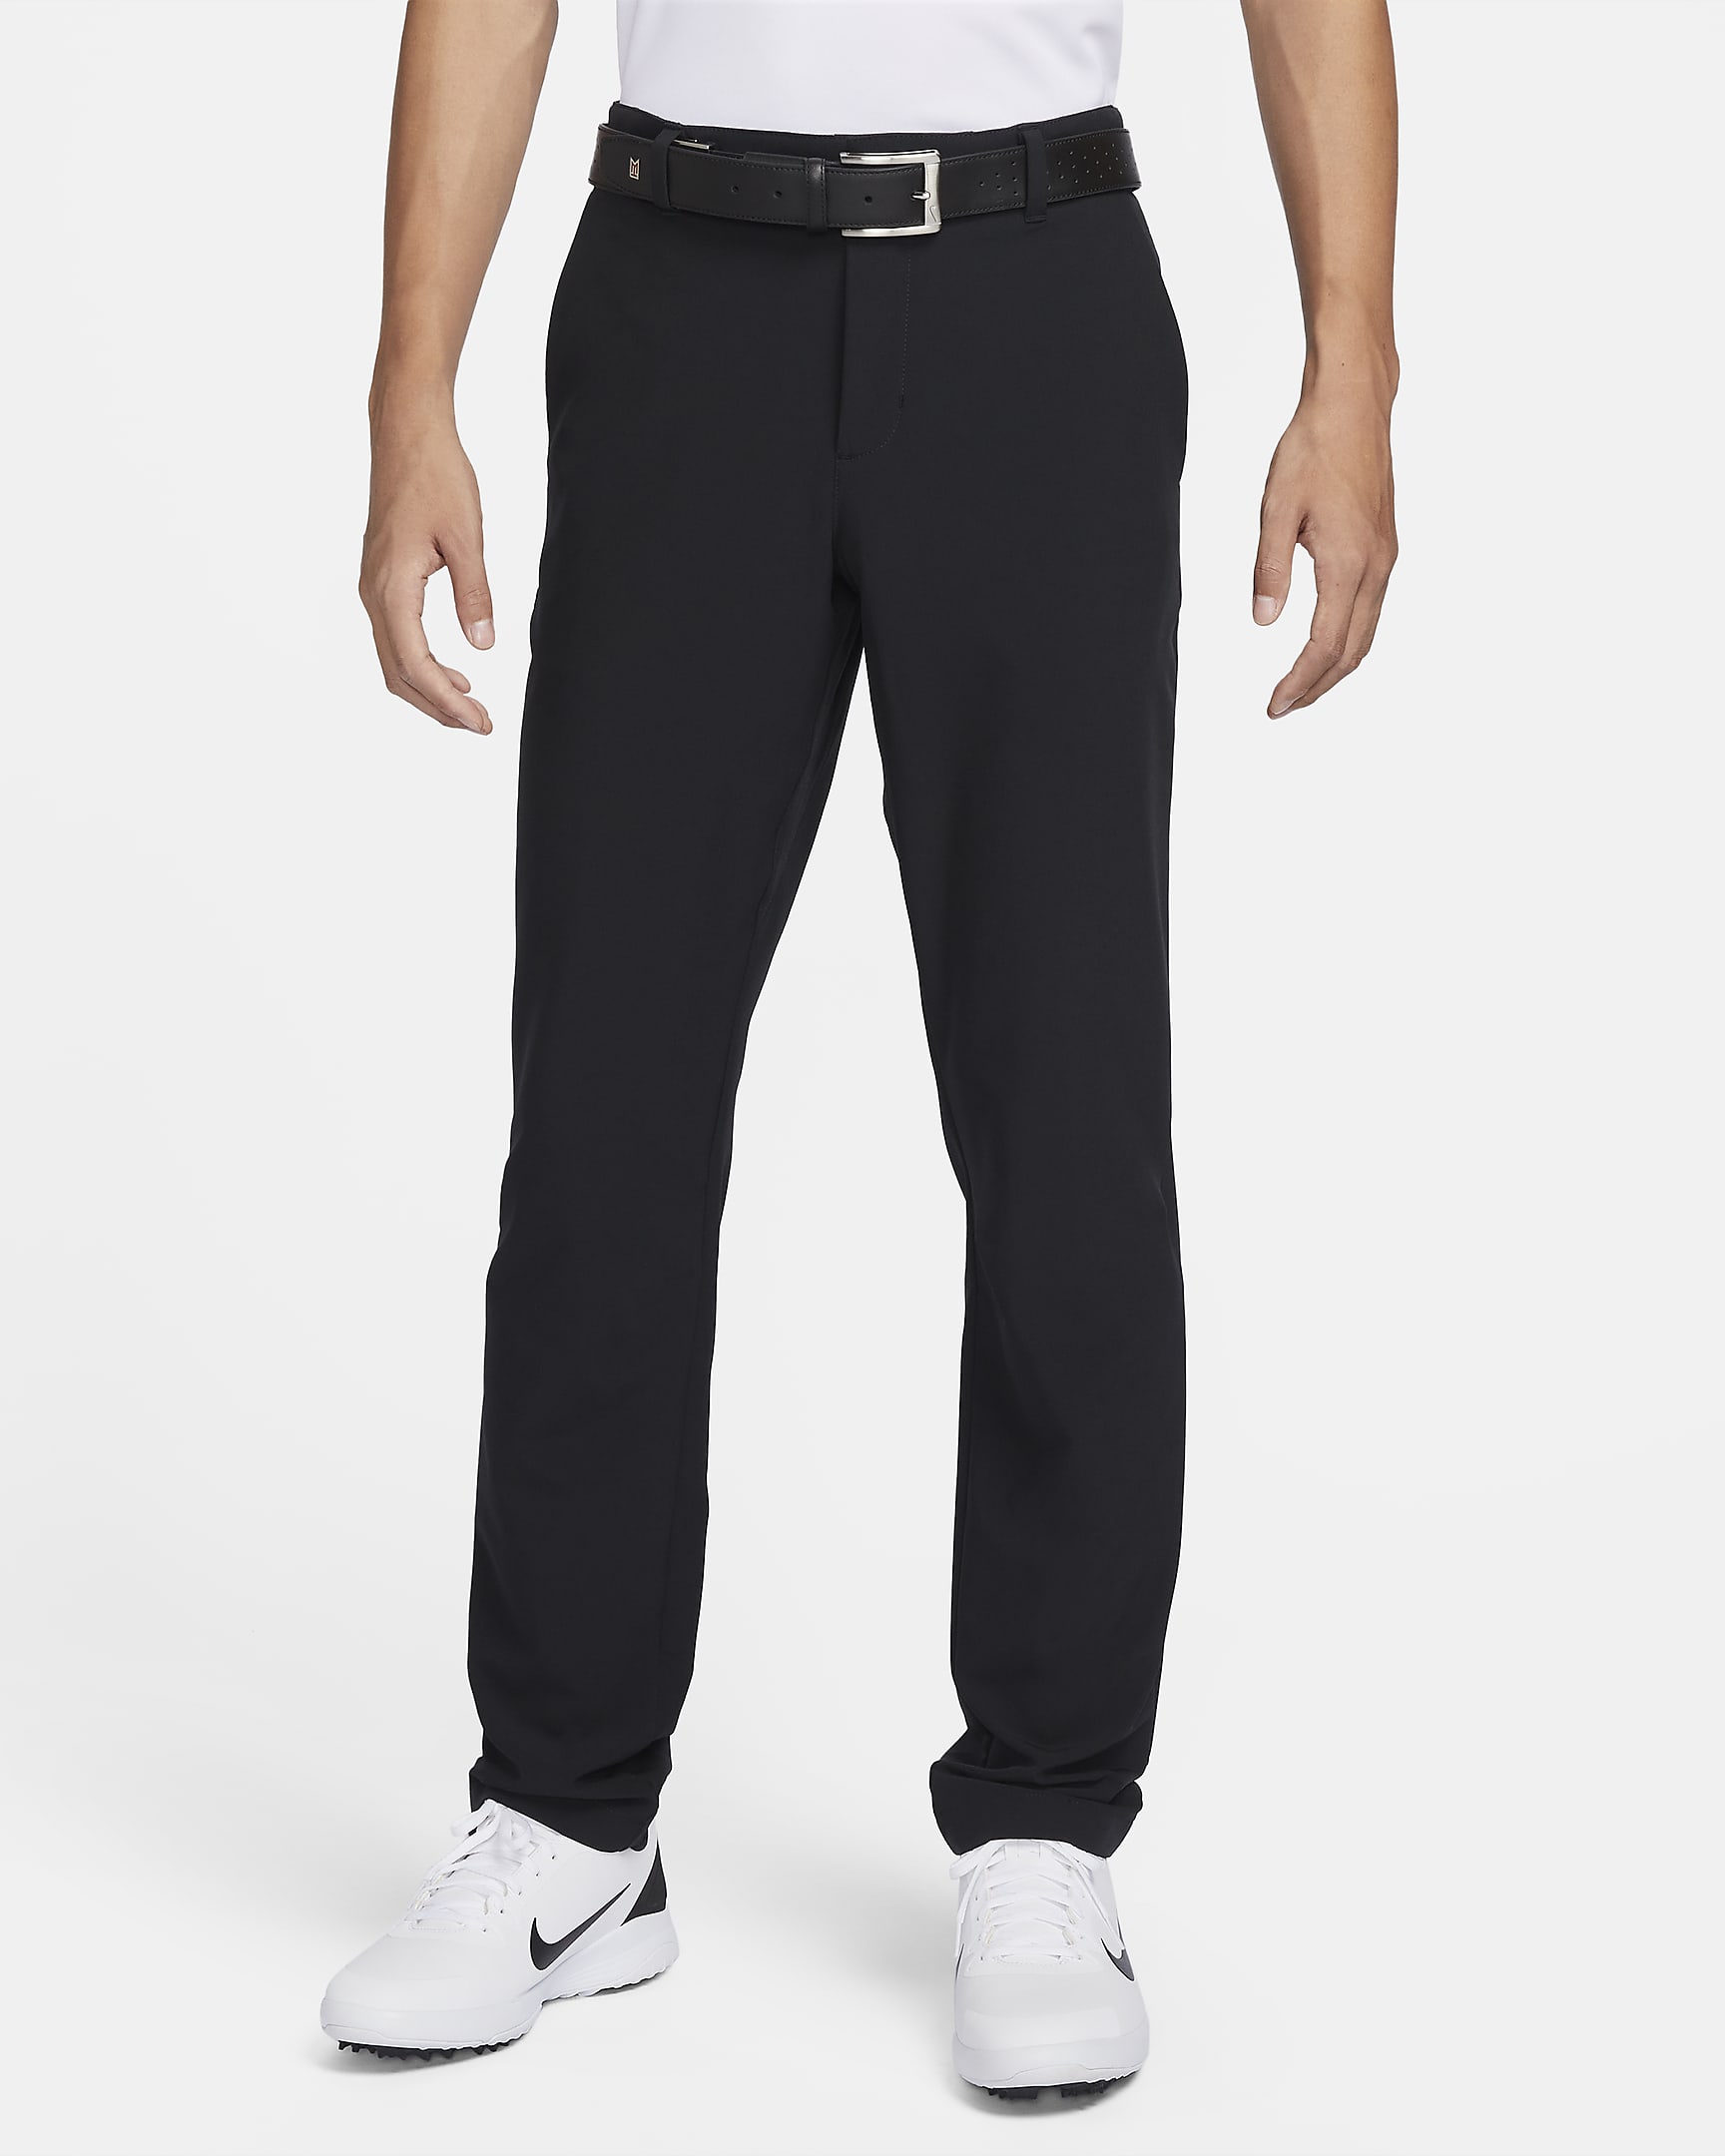 Nike Dri-FIT Vapor Men's Slim-Fit Golf Trousers. Nike SG